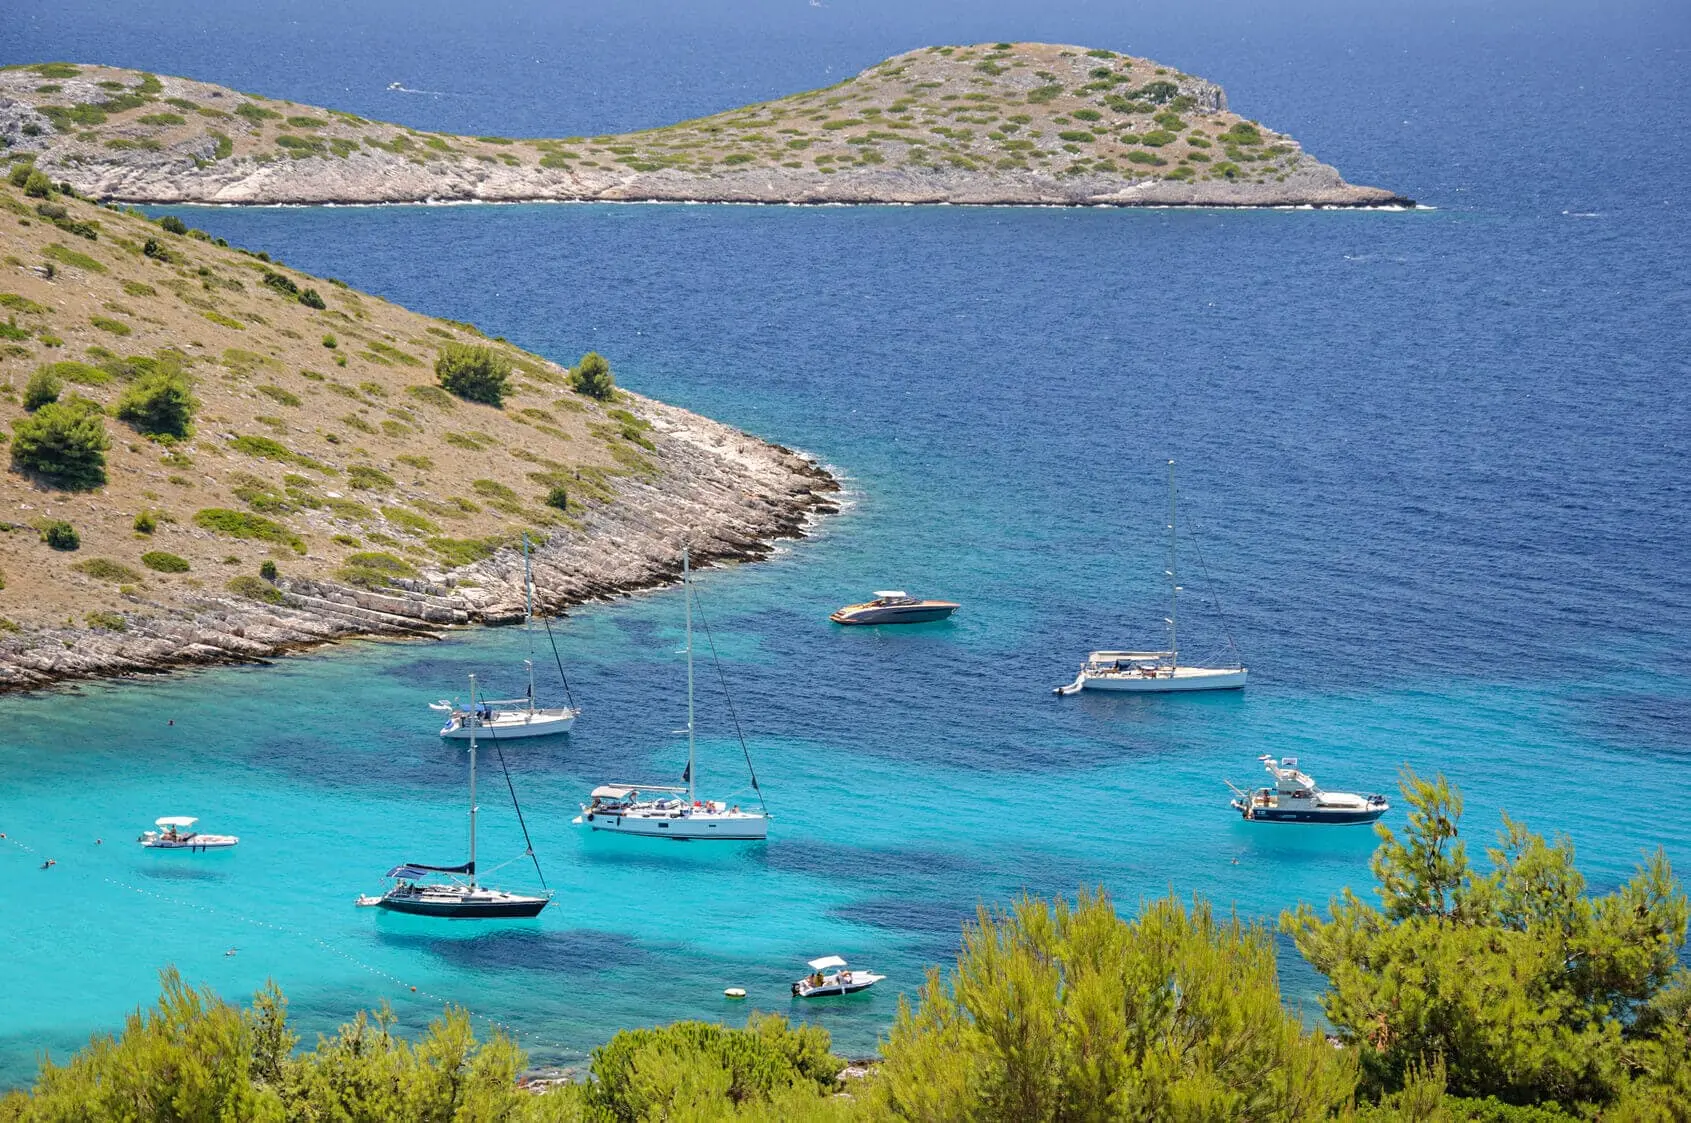 Kornati in Croatia with yachts sailing around in the emerald blue water